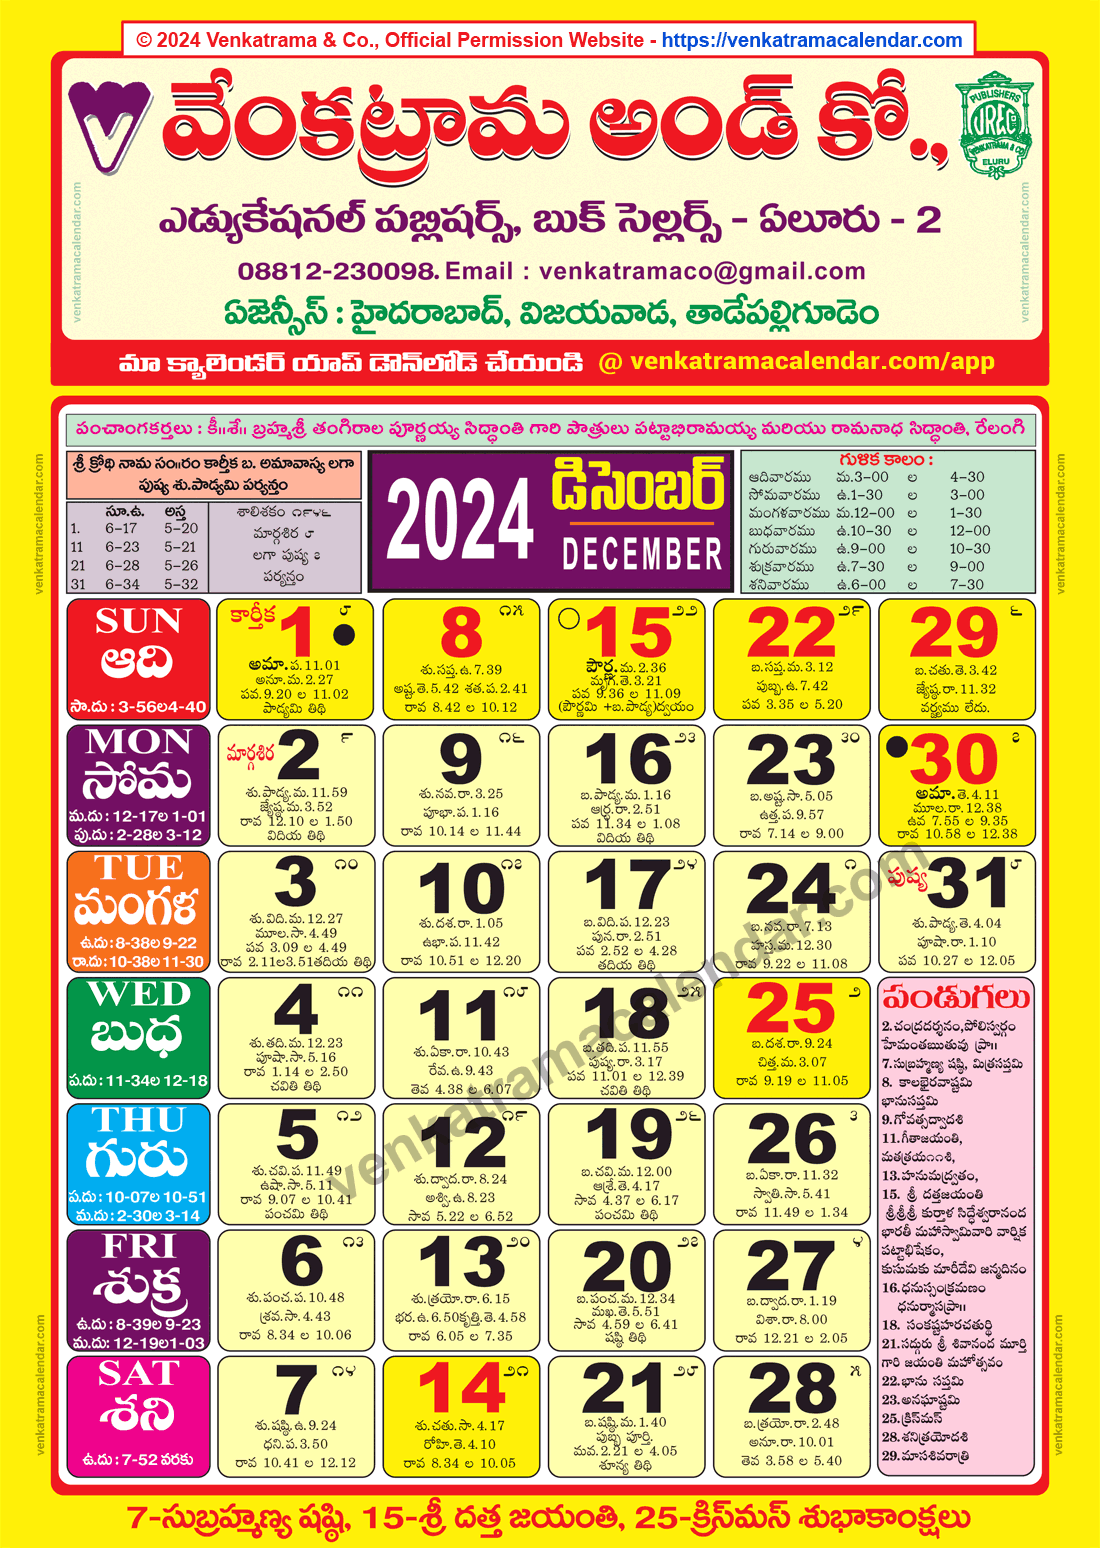 Venkatrama Calendar 2024 December